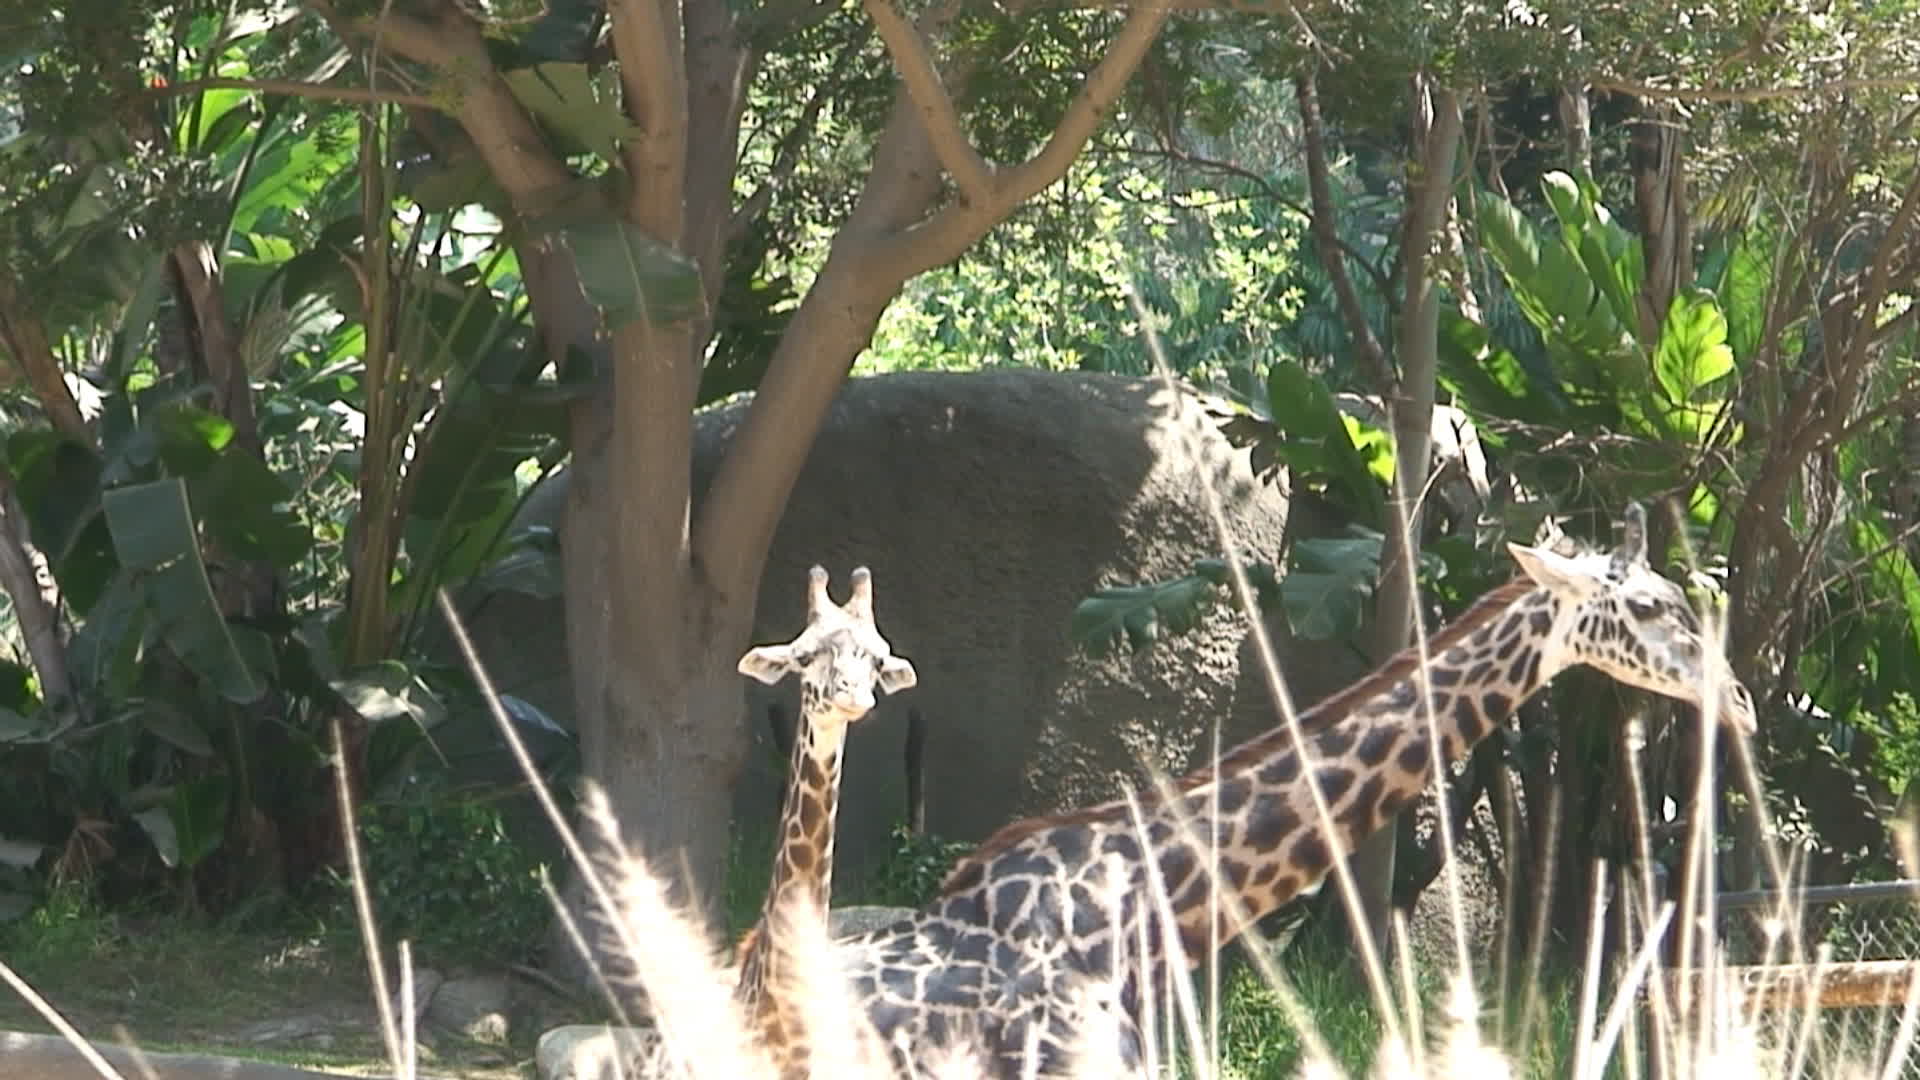 A Mother and Baby Giraffe - Animals - 4fun.com